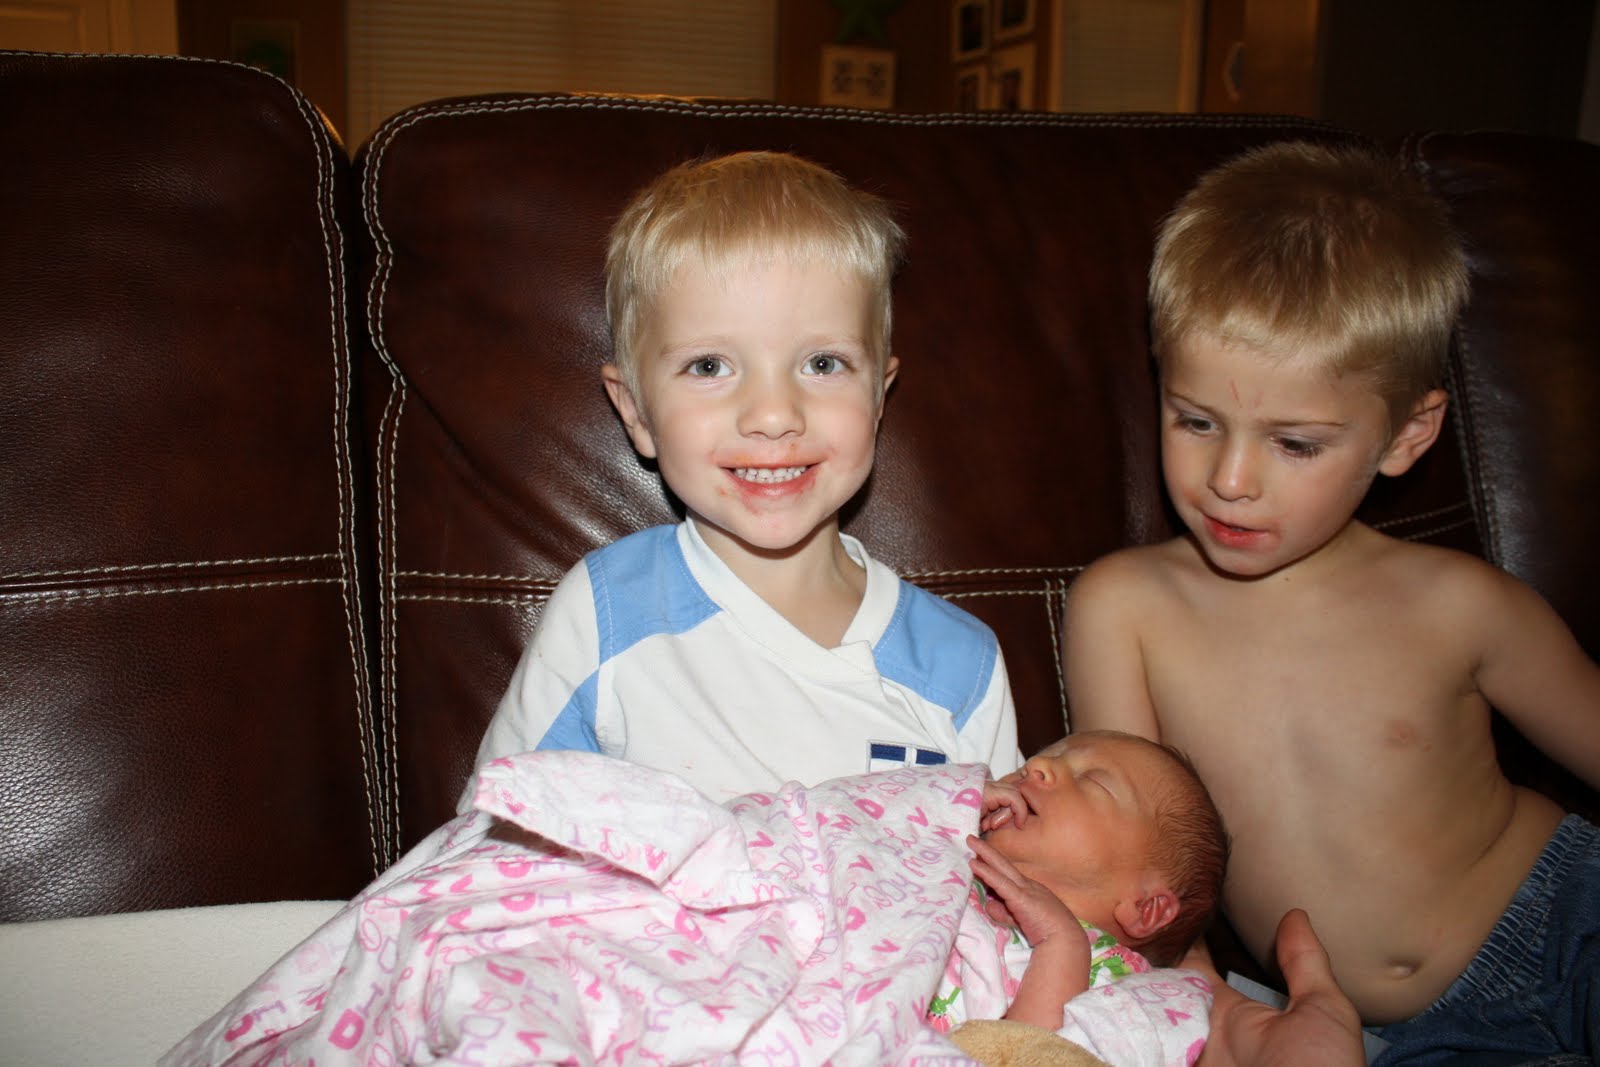 San & Quinn: These boys love their baby sister